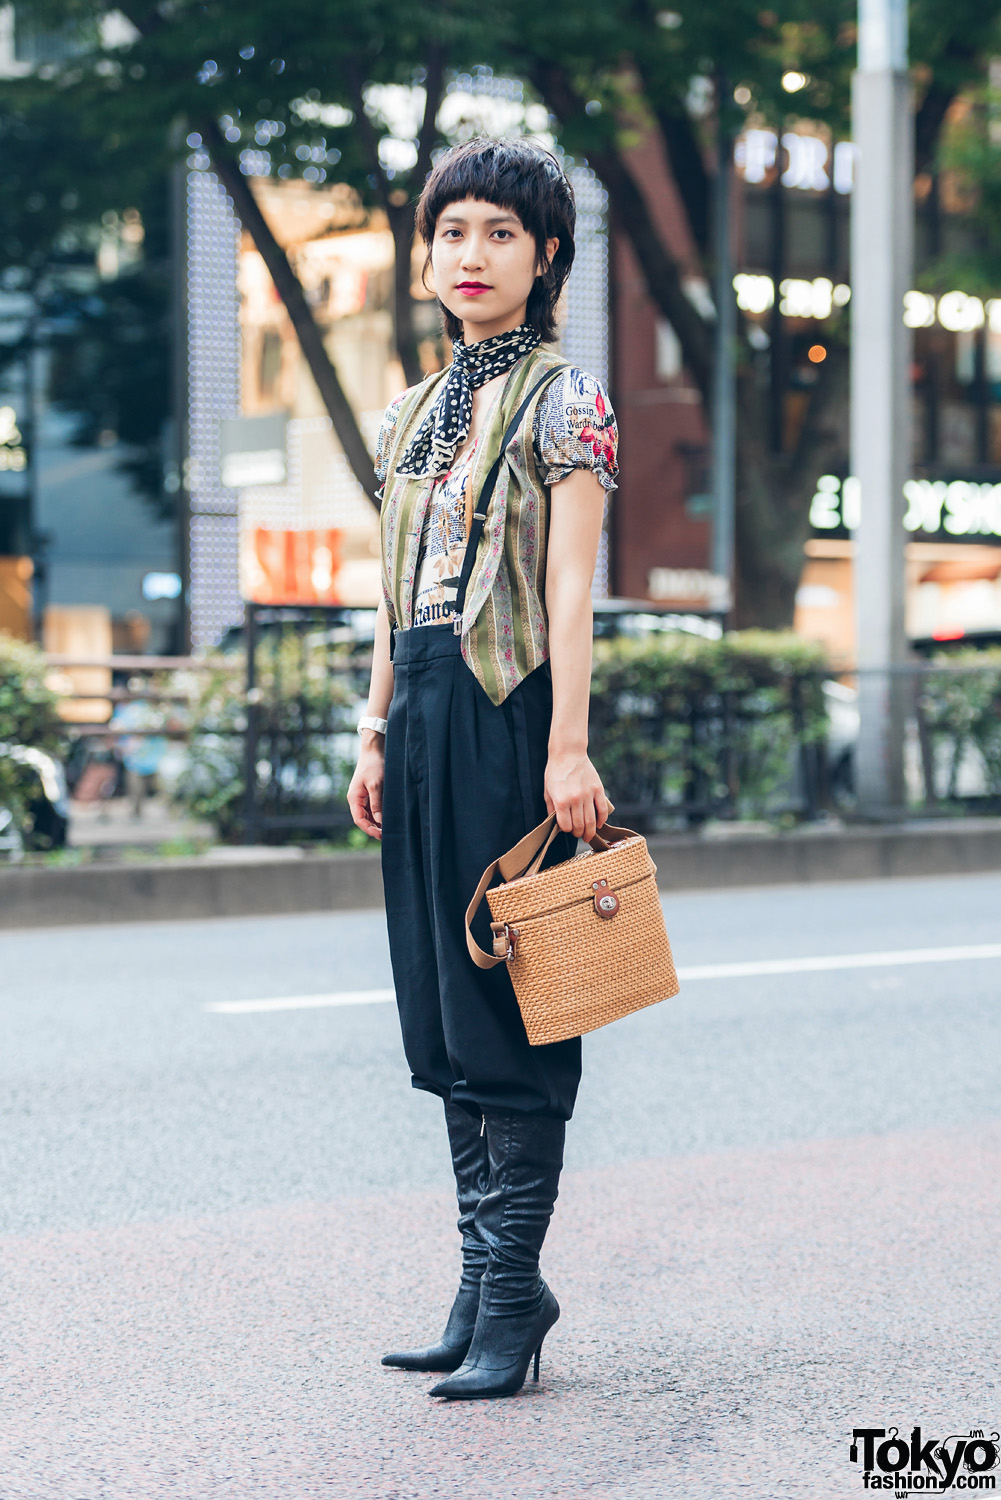 Harajuku Girl in Chic Retro Street Style w/ John Galliano Print Top & Suspenders